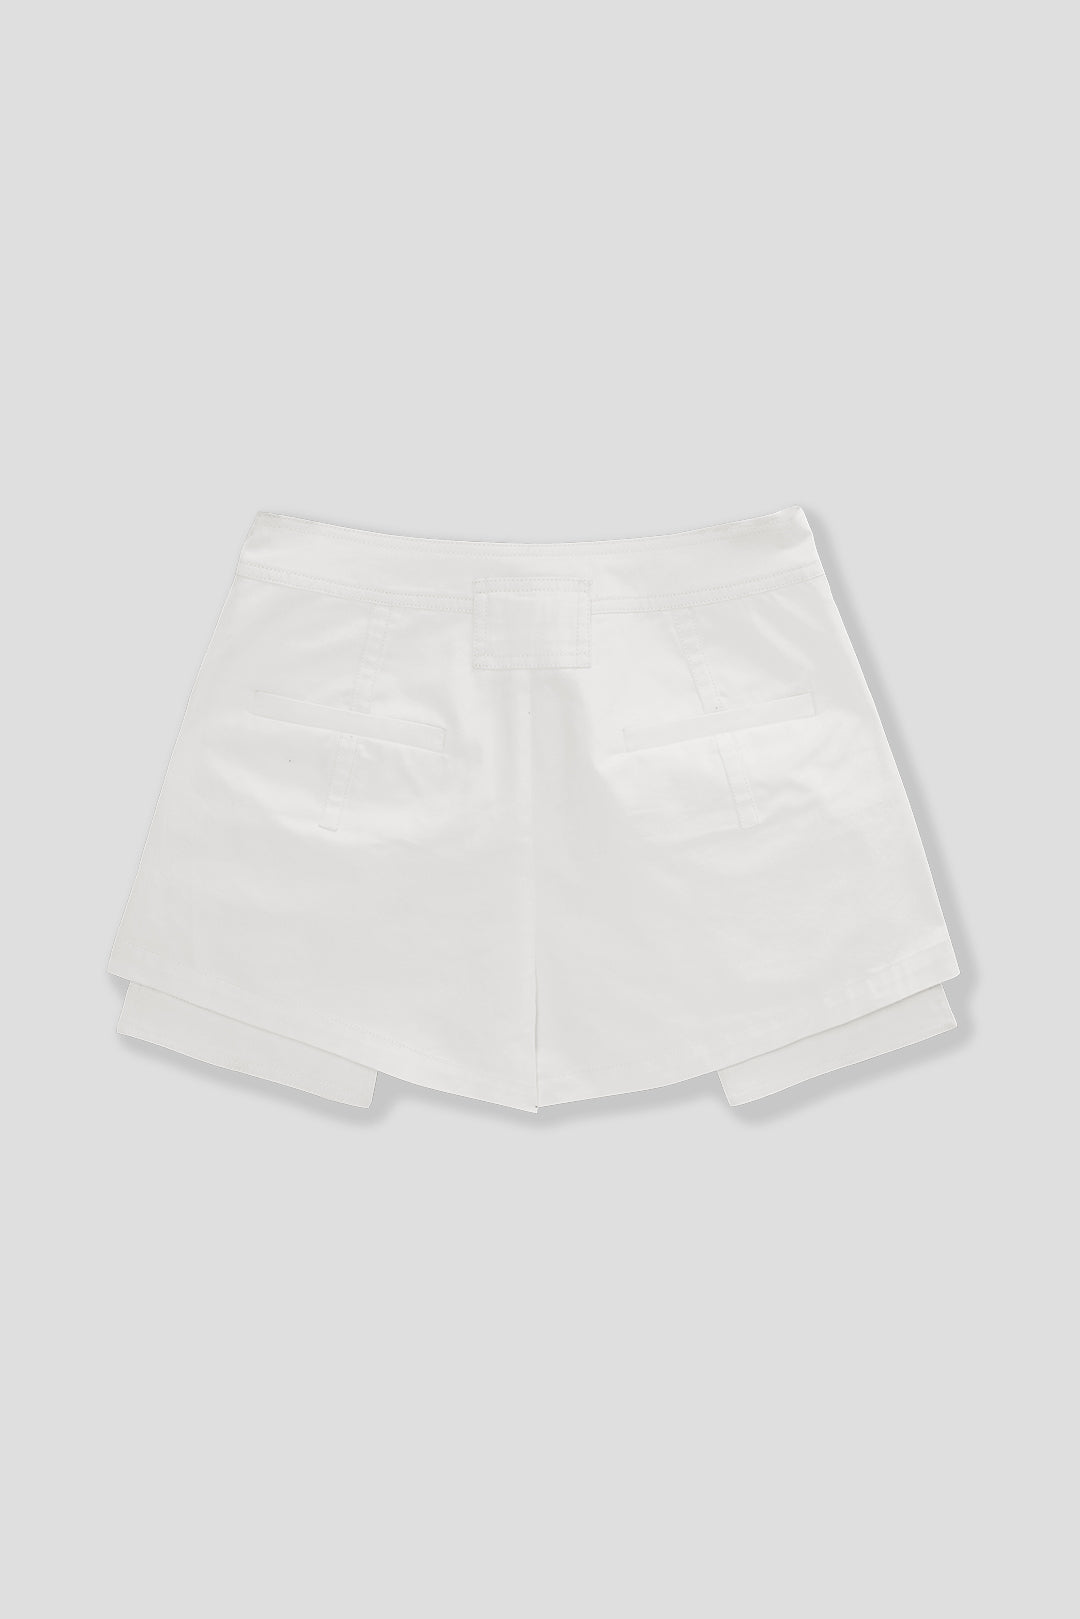 Inverted waist opening shorts